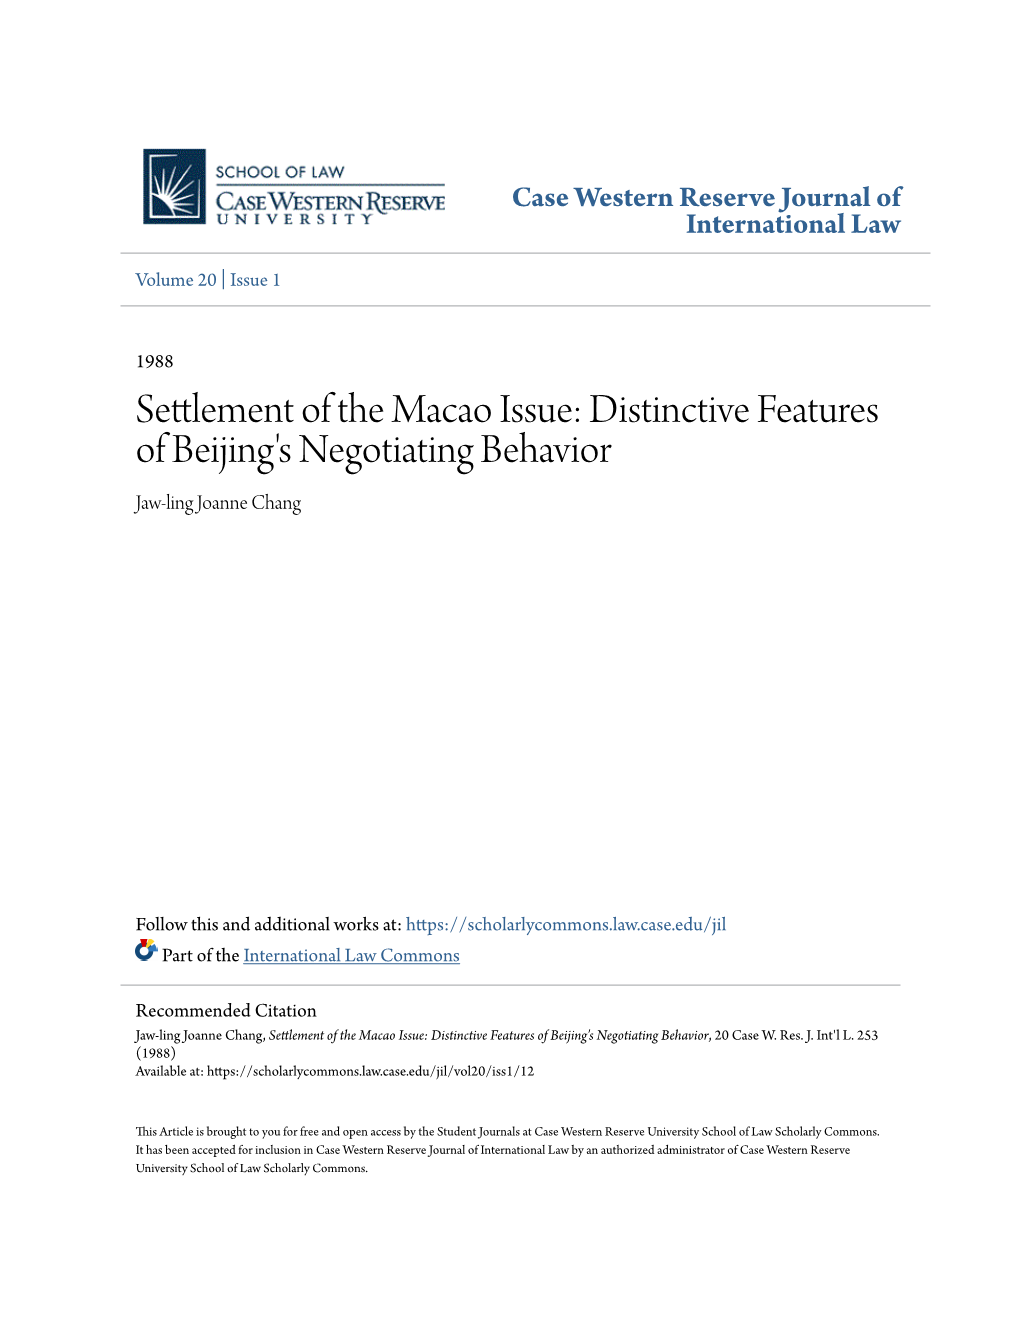 Distinctive Features of Beijing's Negotiating Behavior Jaw-Ling Joanne Chang